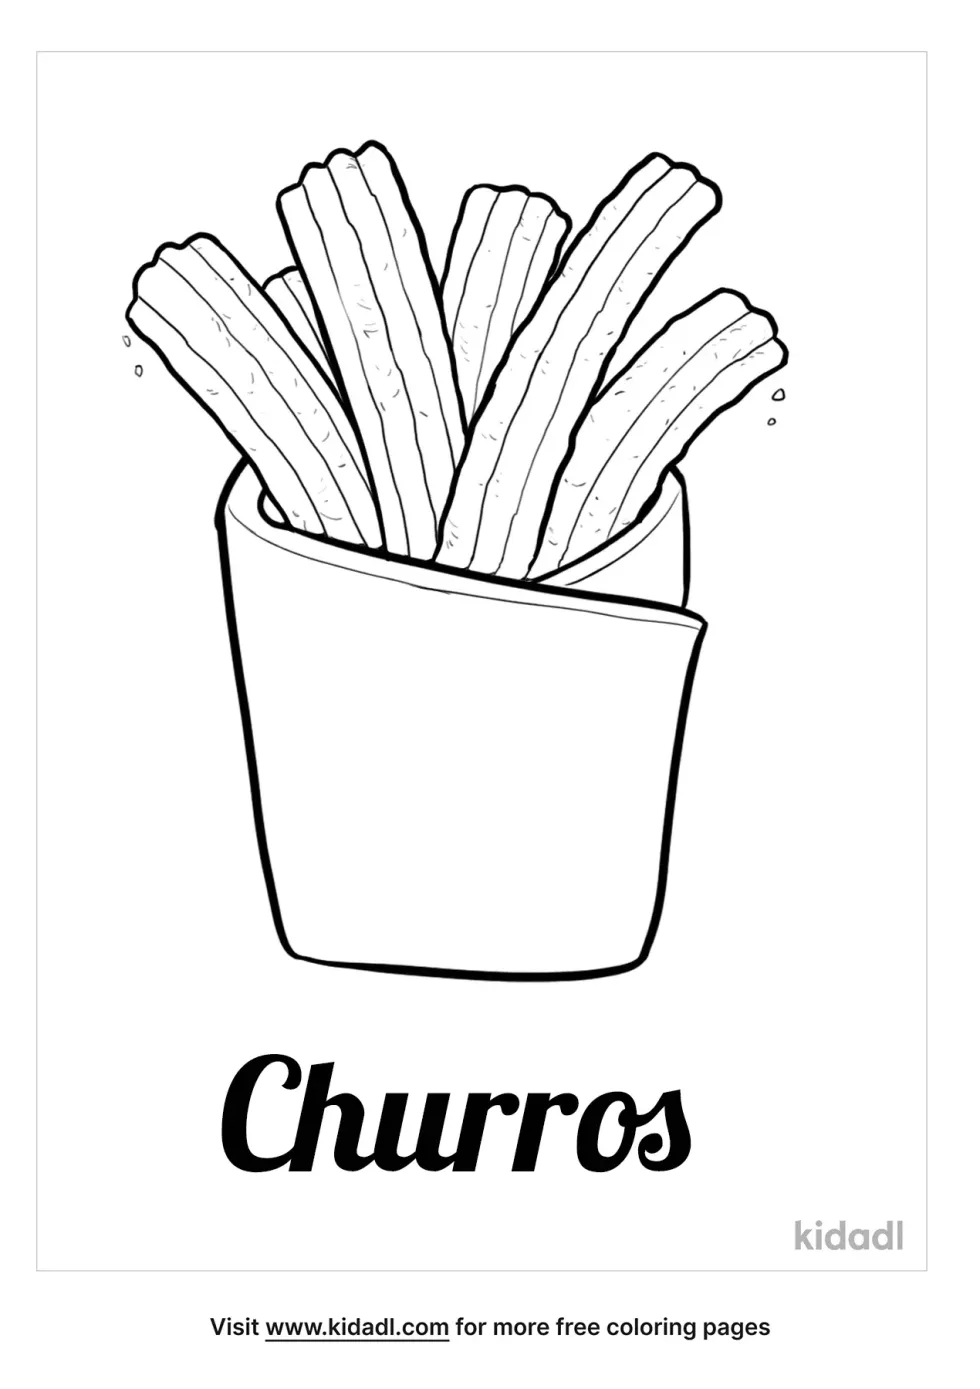 Churros Coloring Page